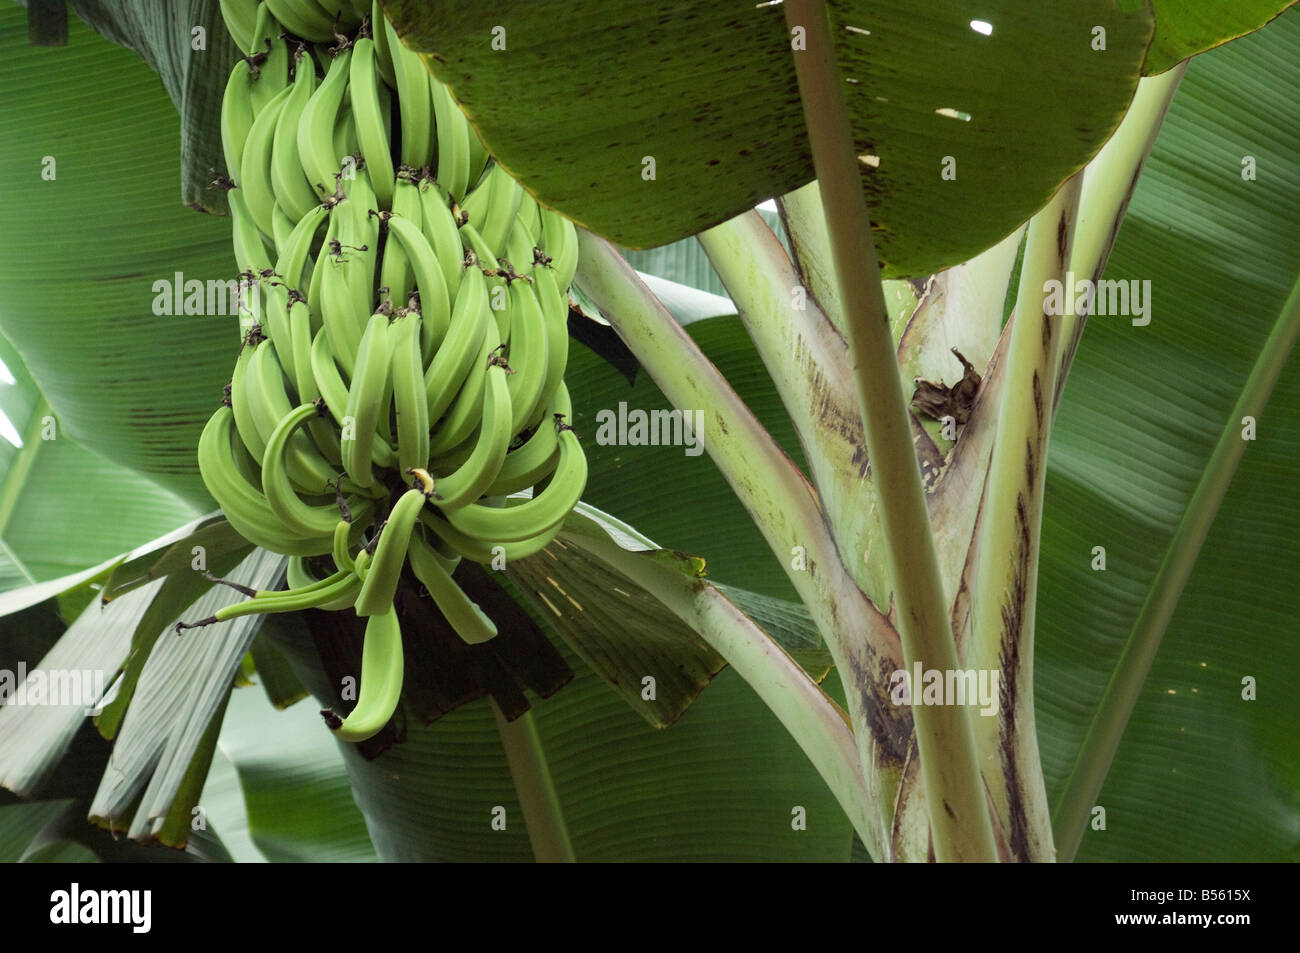 Bananas on a plantation in El Oro Province near Machala, Ecuador. Digital photograph Stock Photo